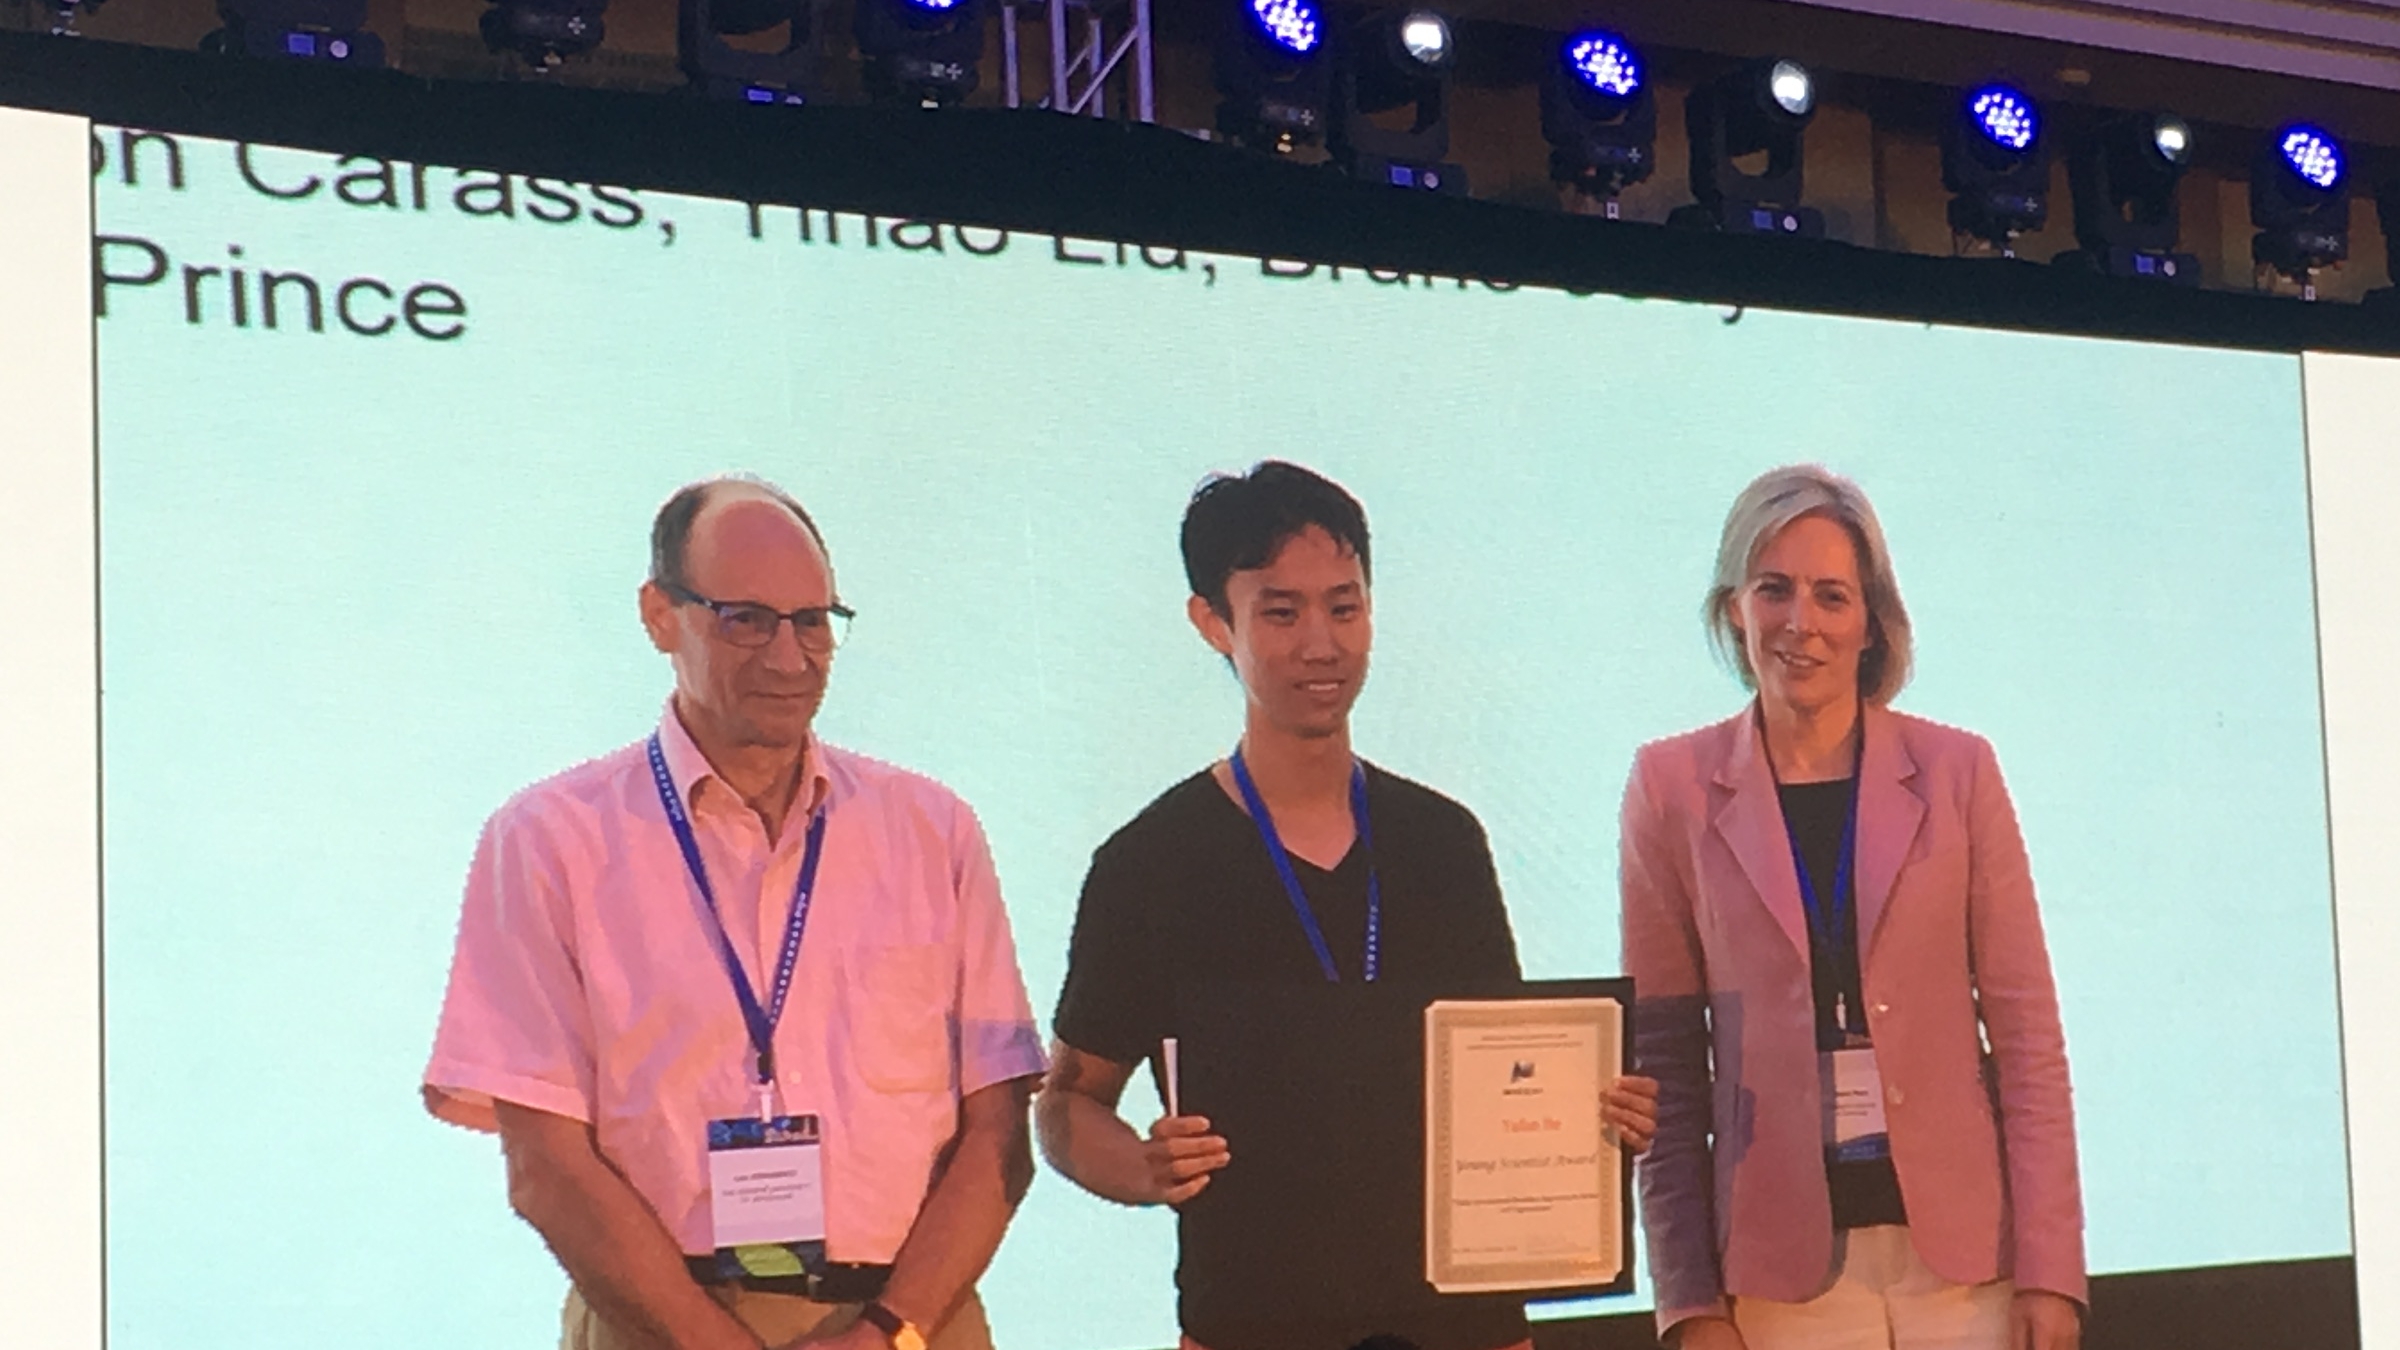 Yufan He wins a MICCAI Young Scientist Award at MICCAI 2019.